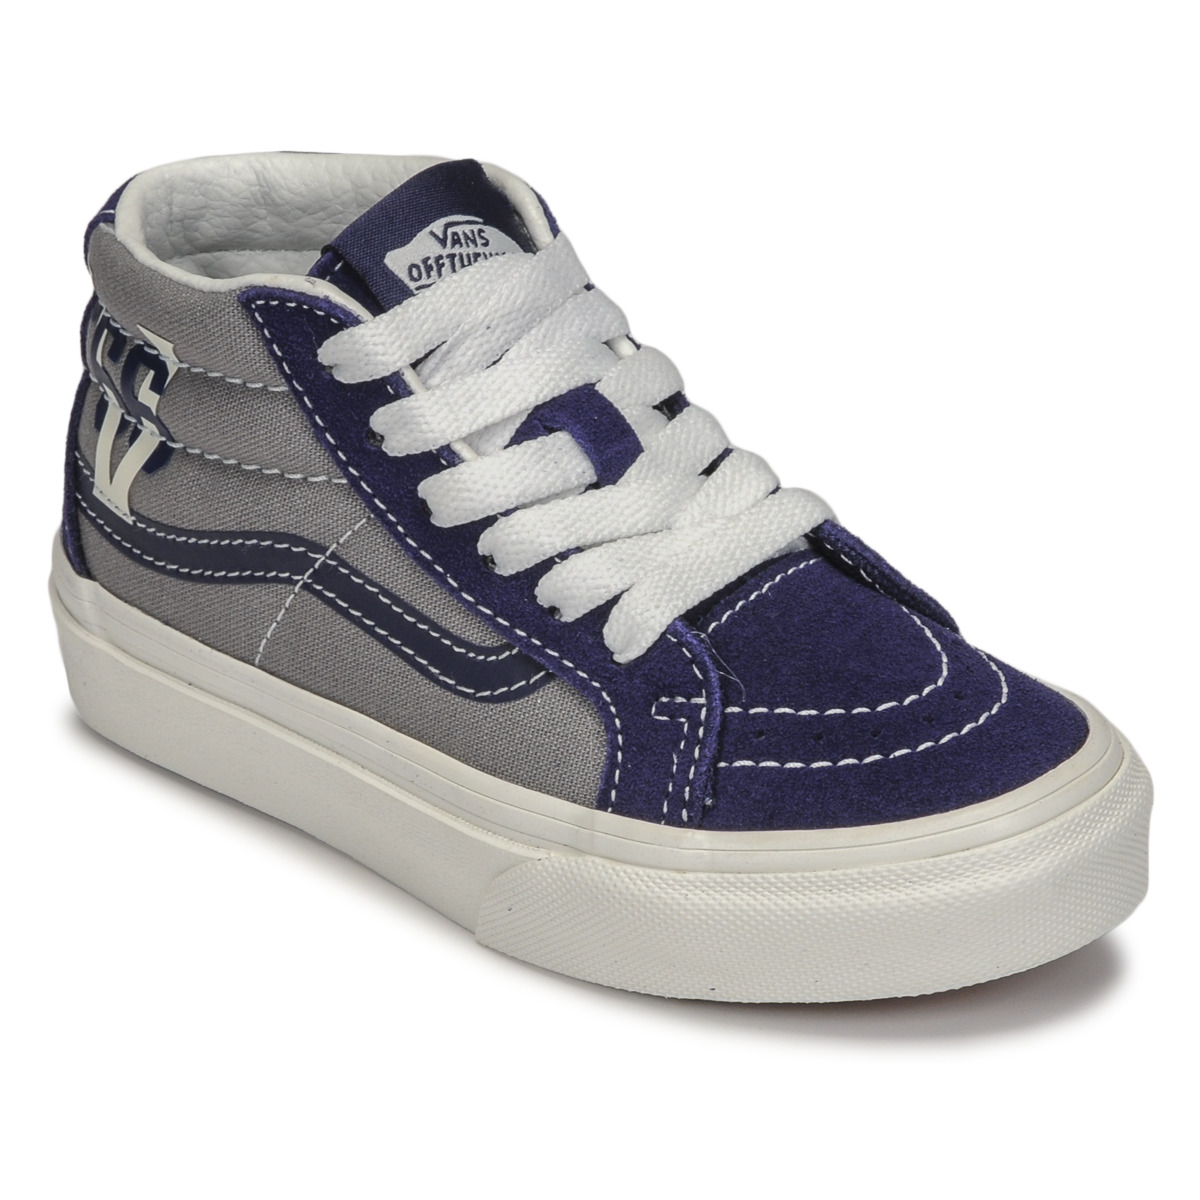 Shoes Boy High top trainers Vans SK8-MID Grey / Marine